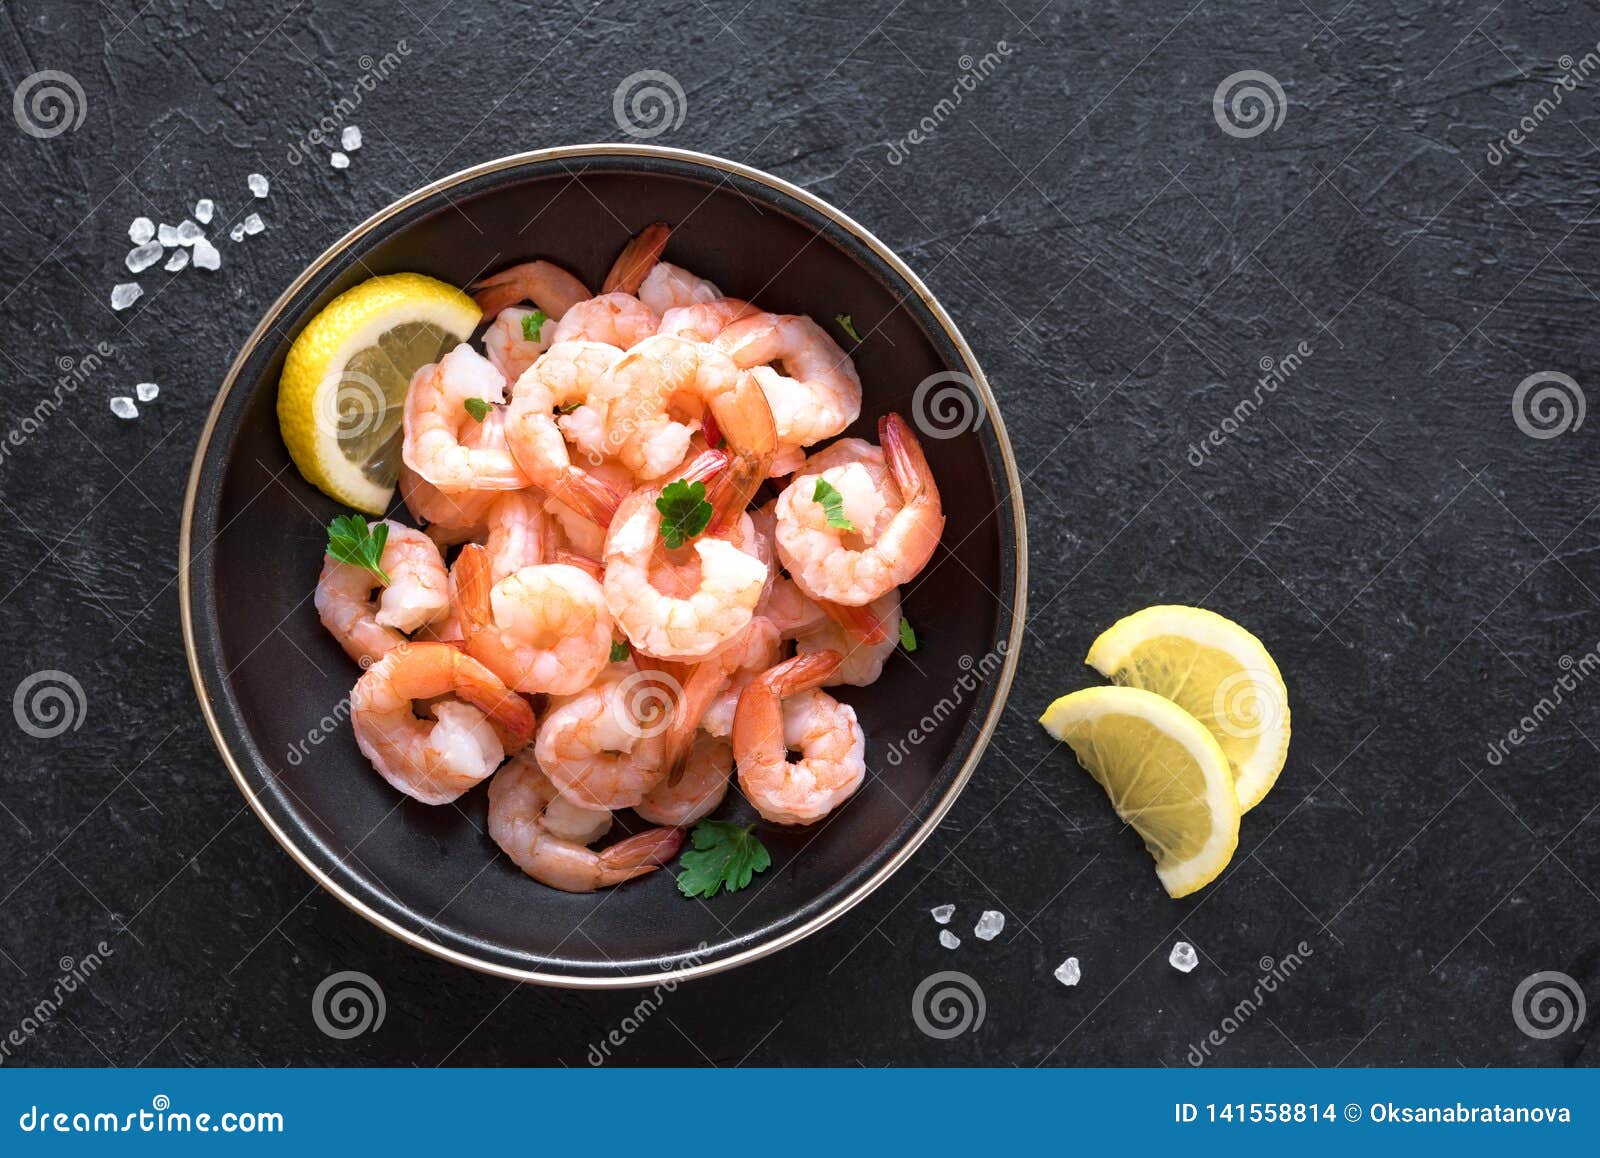 shrimps, prawns